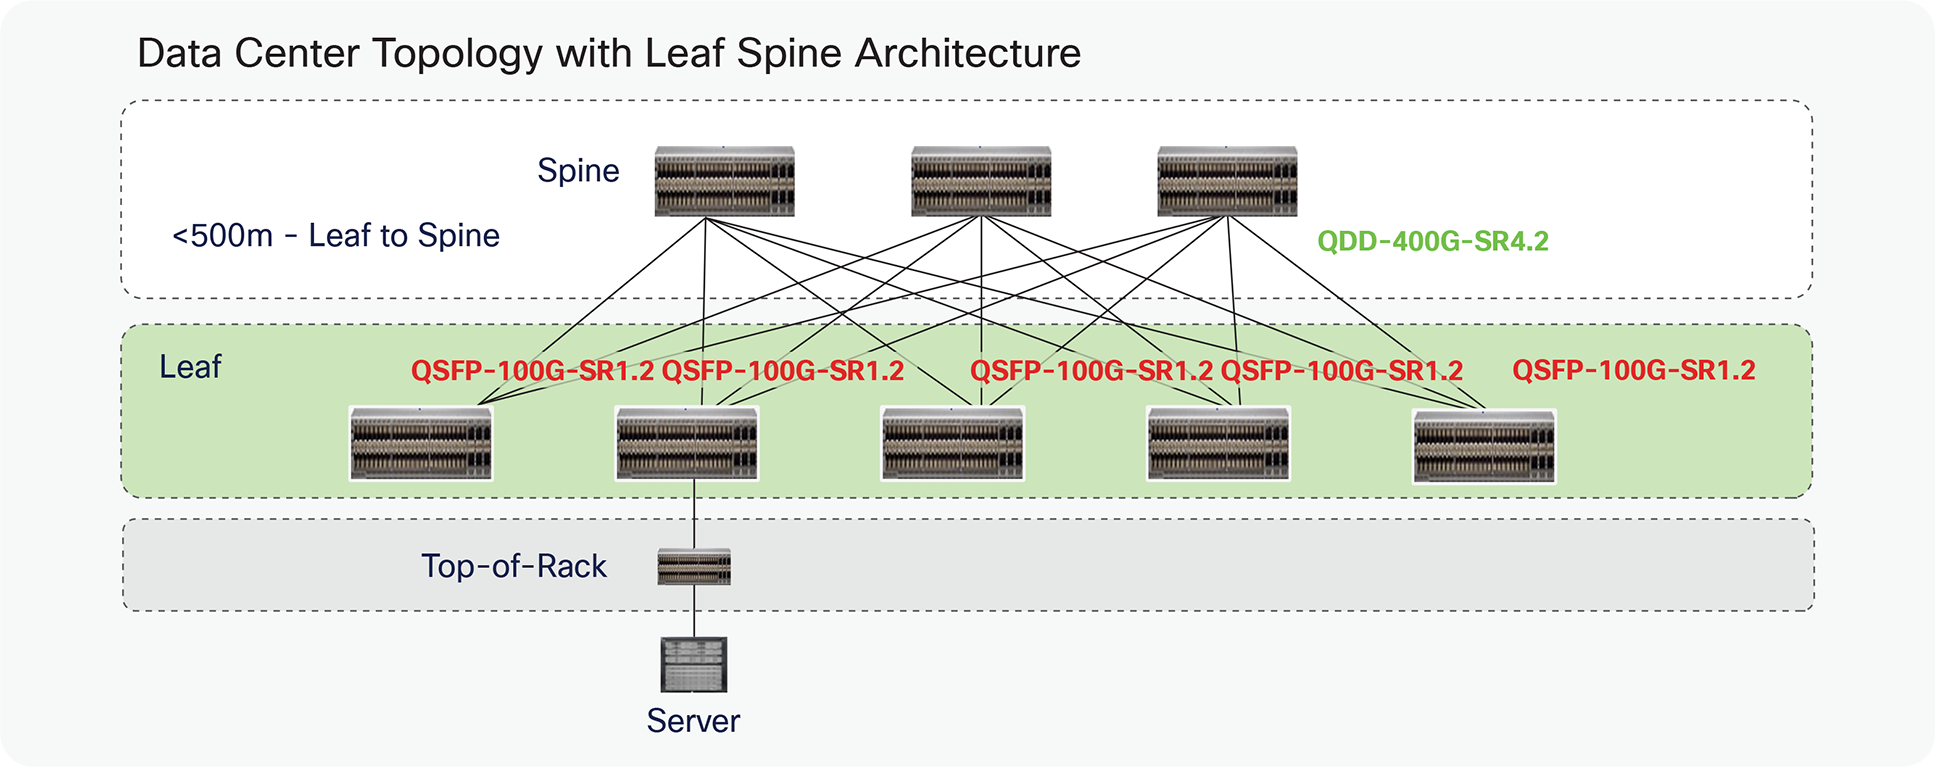 Leaf spine connectivity using QSFP-100G-SR1.2 optics